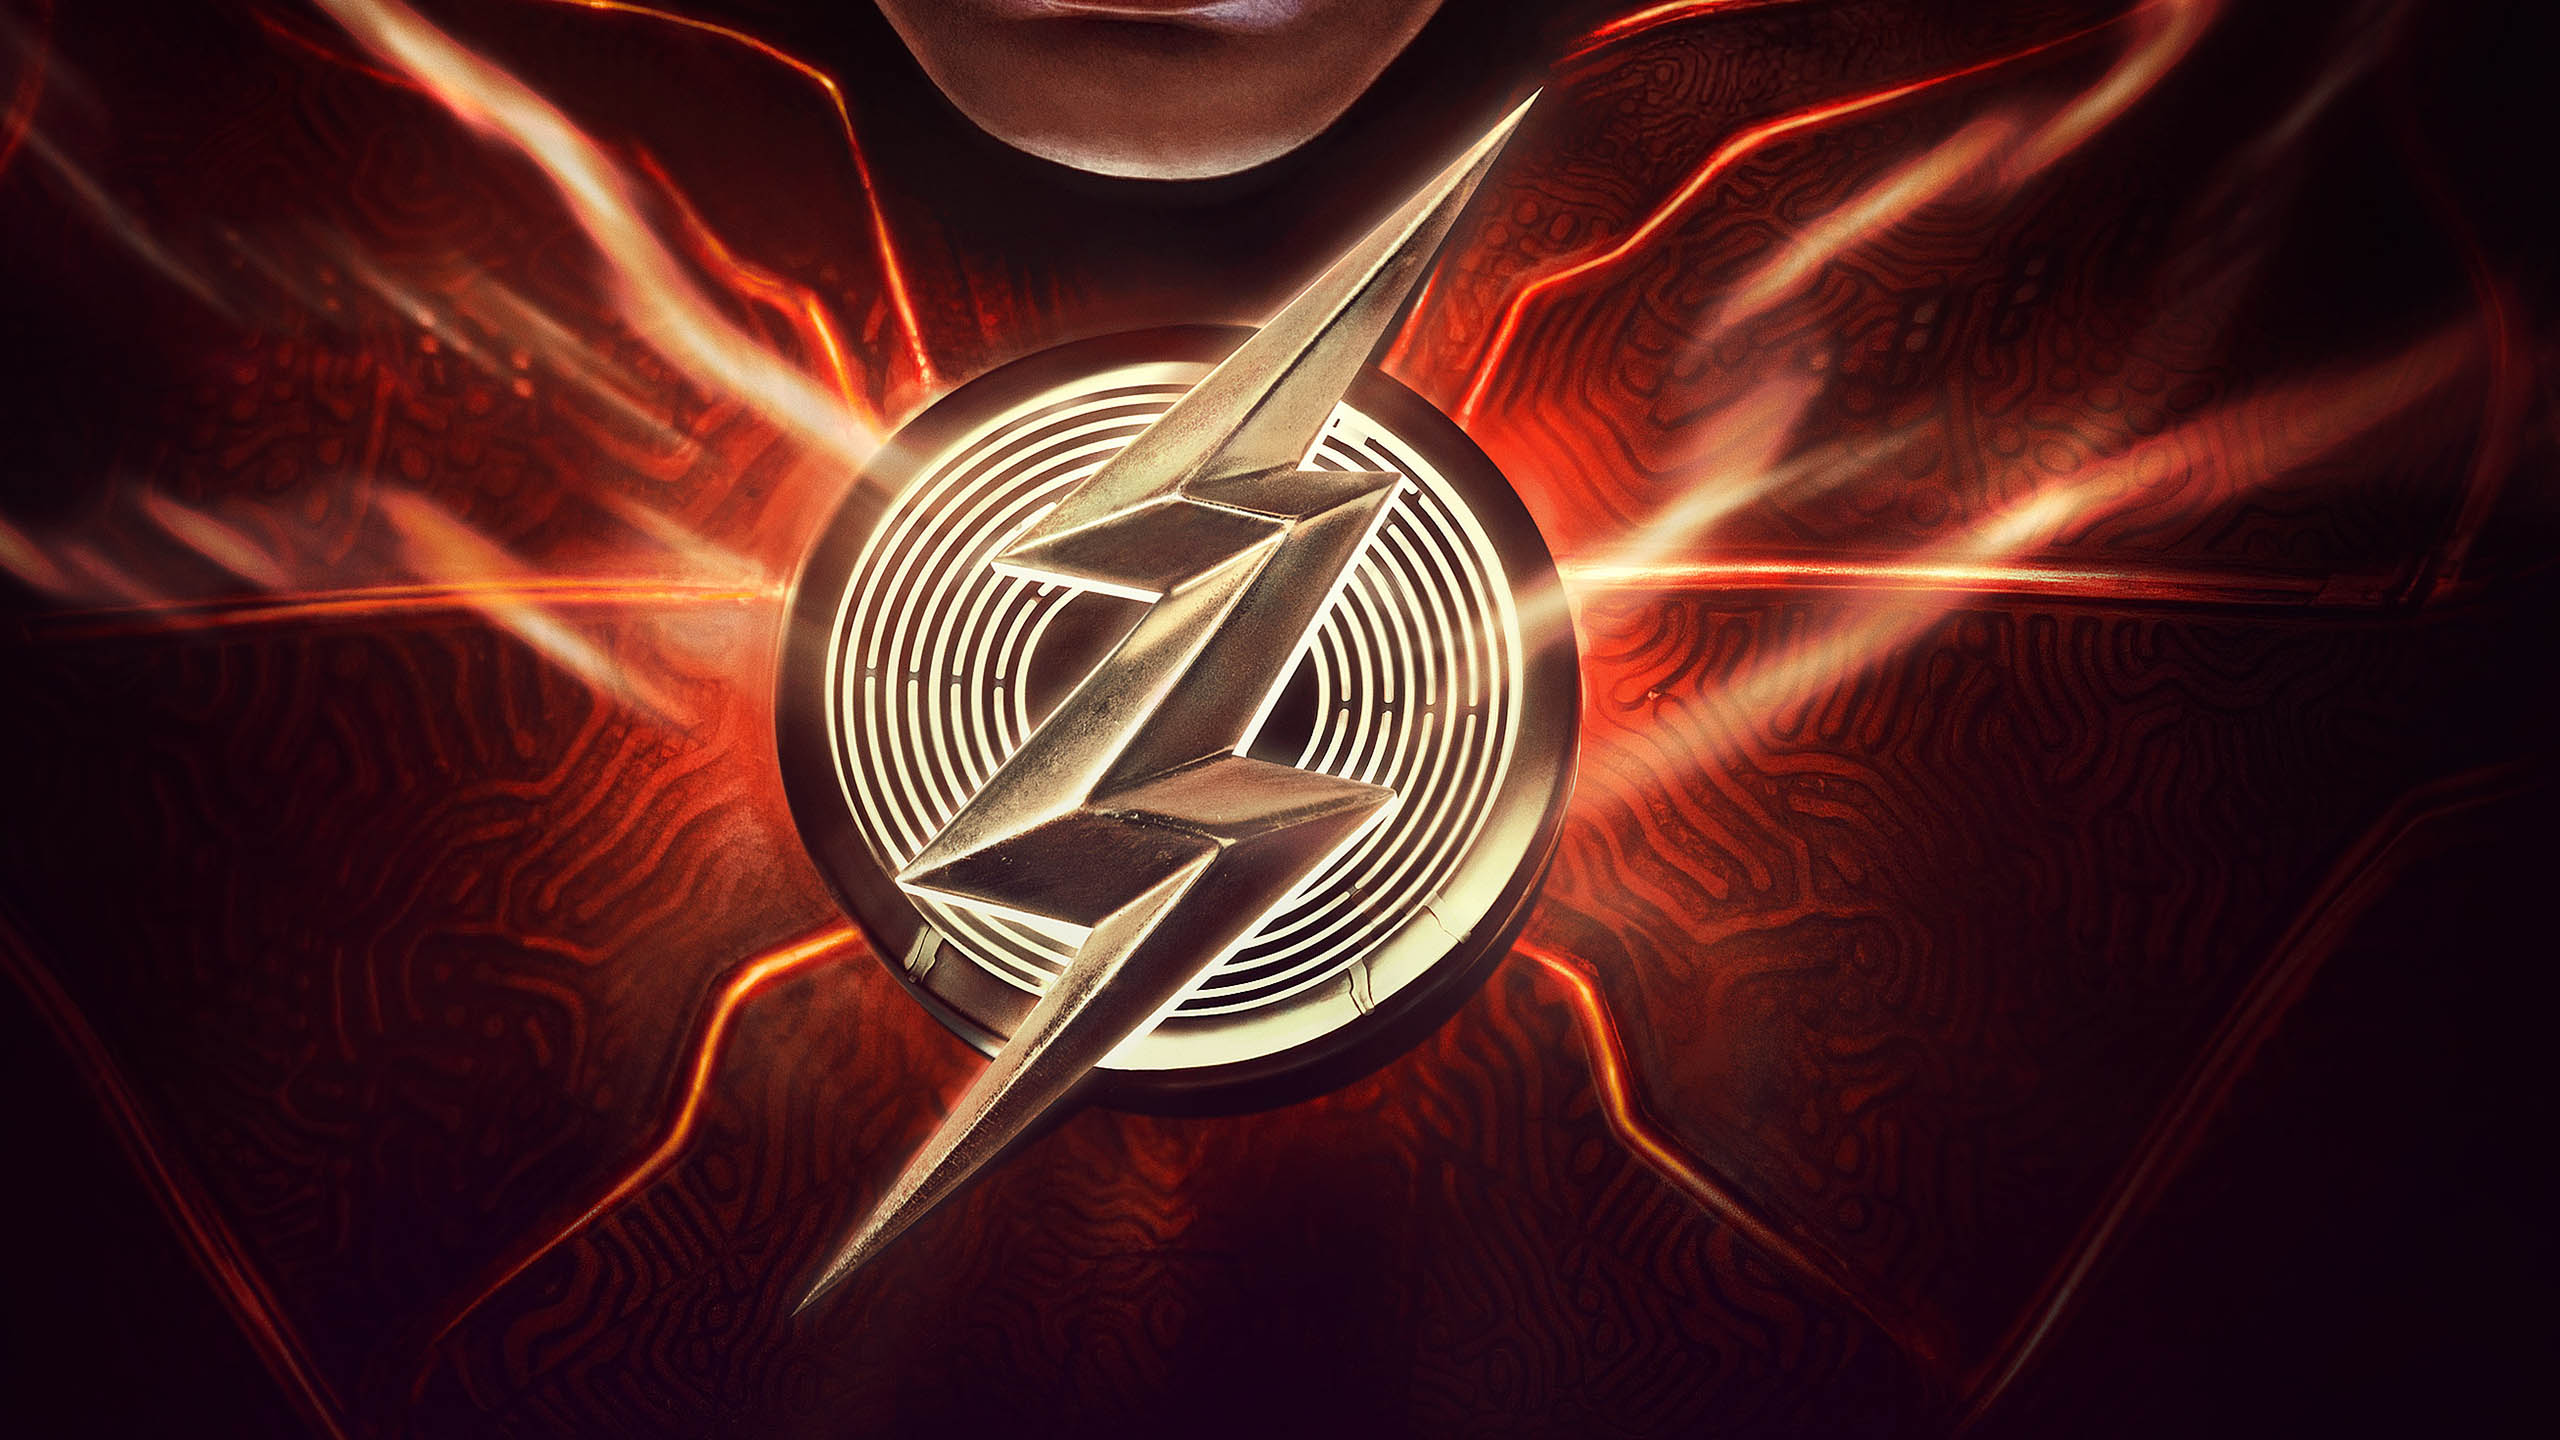 New Flash Season 9 Poster Art Released